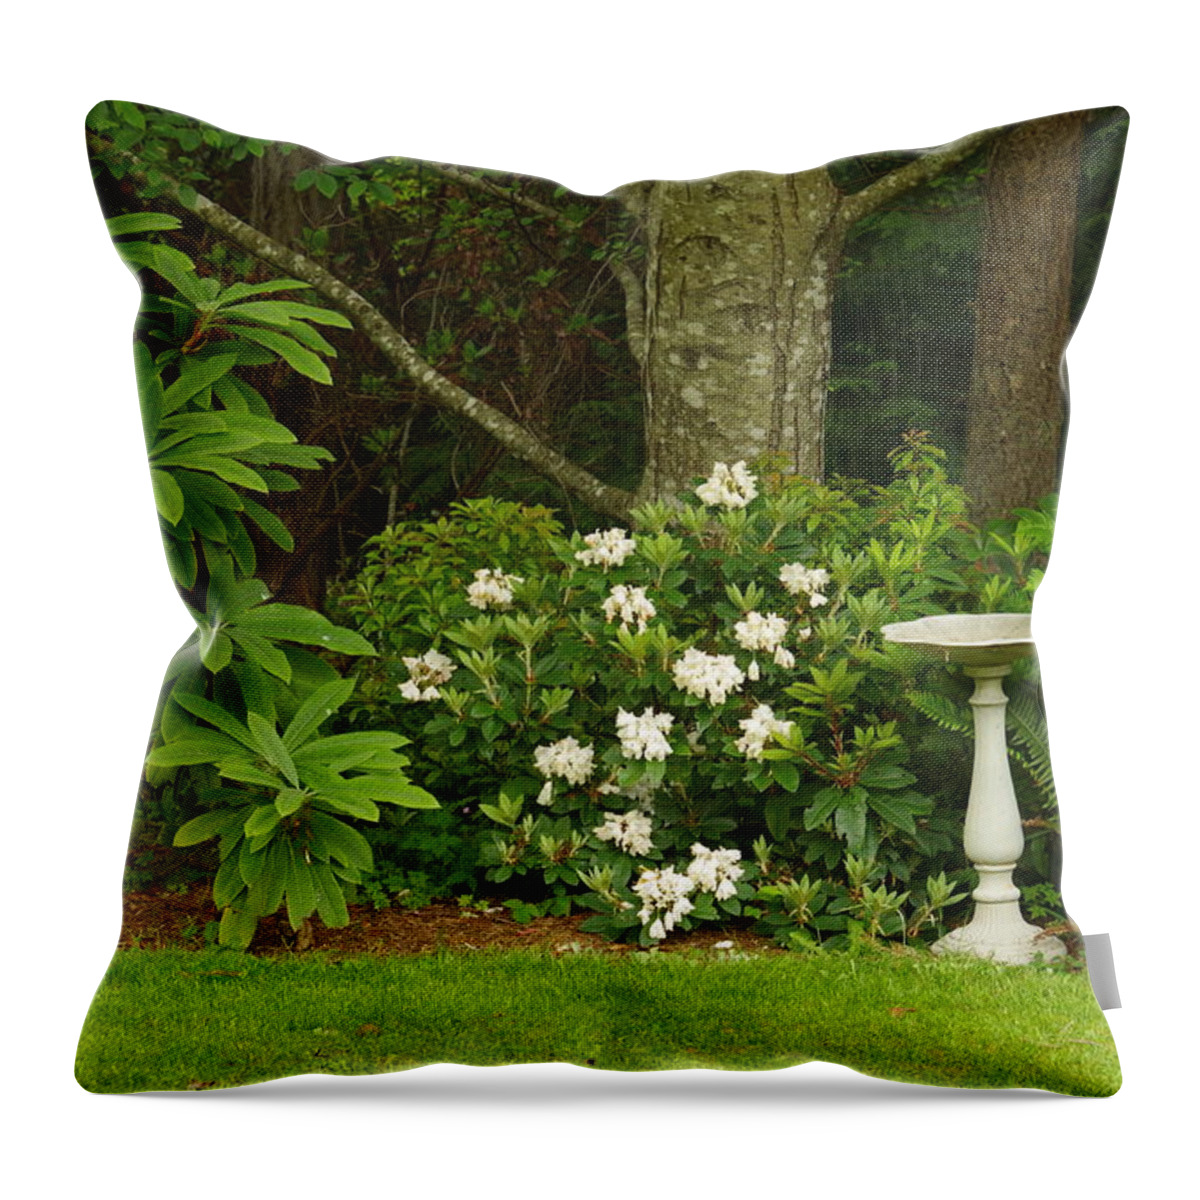 Natural Garden Throw Pillow featuring the photograph Backyard Garden by Marilyn Wilson